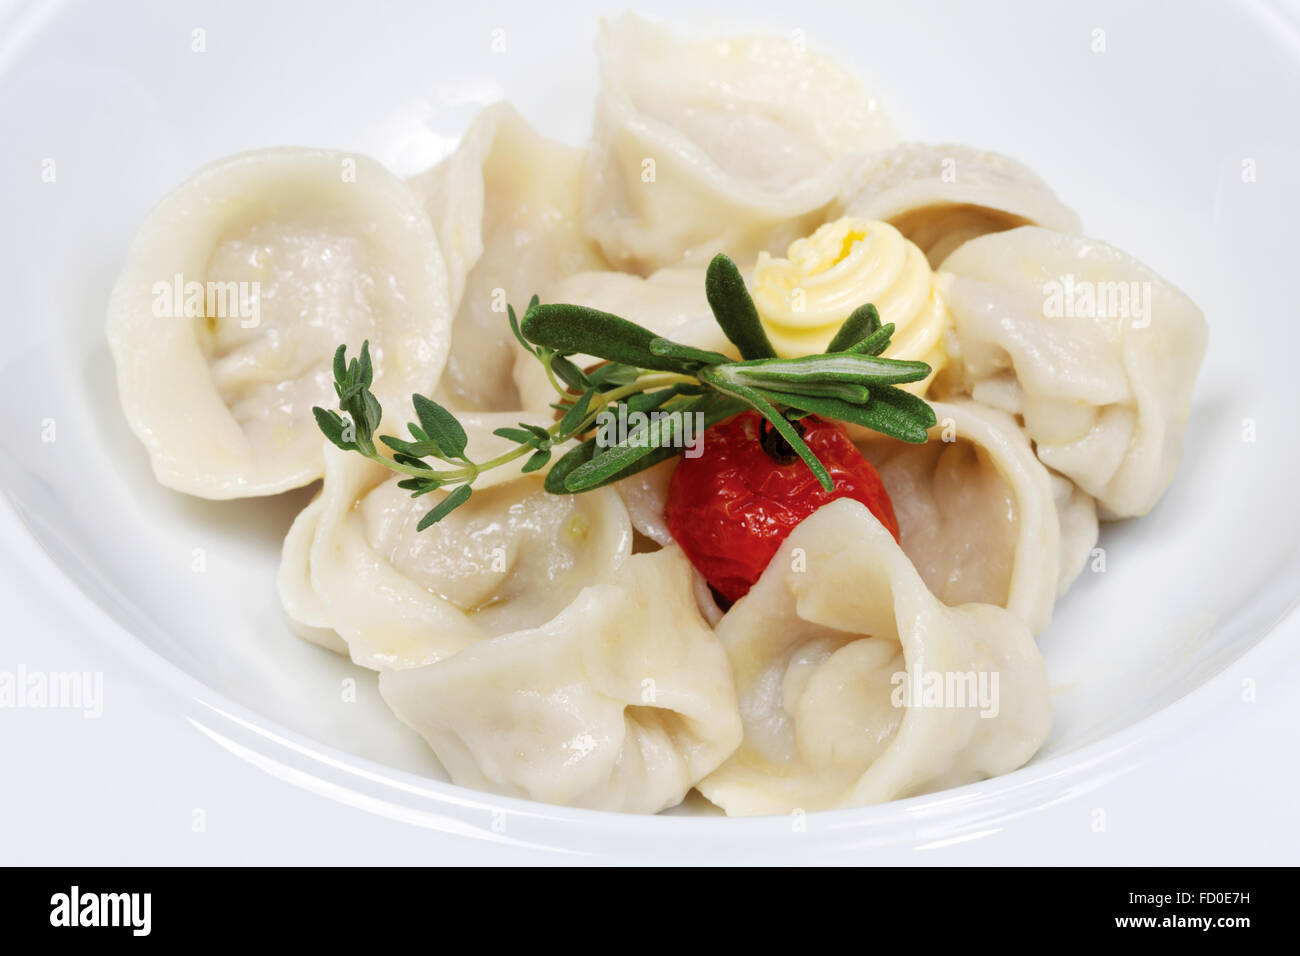 Dumplings with butter - russian pelmeni - italian ravioli - on white plate Stock Photo